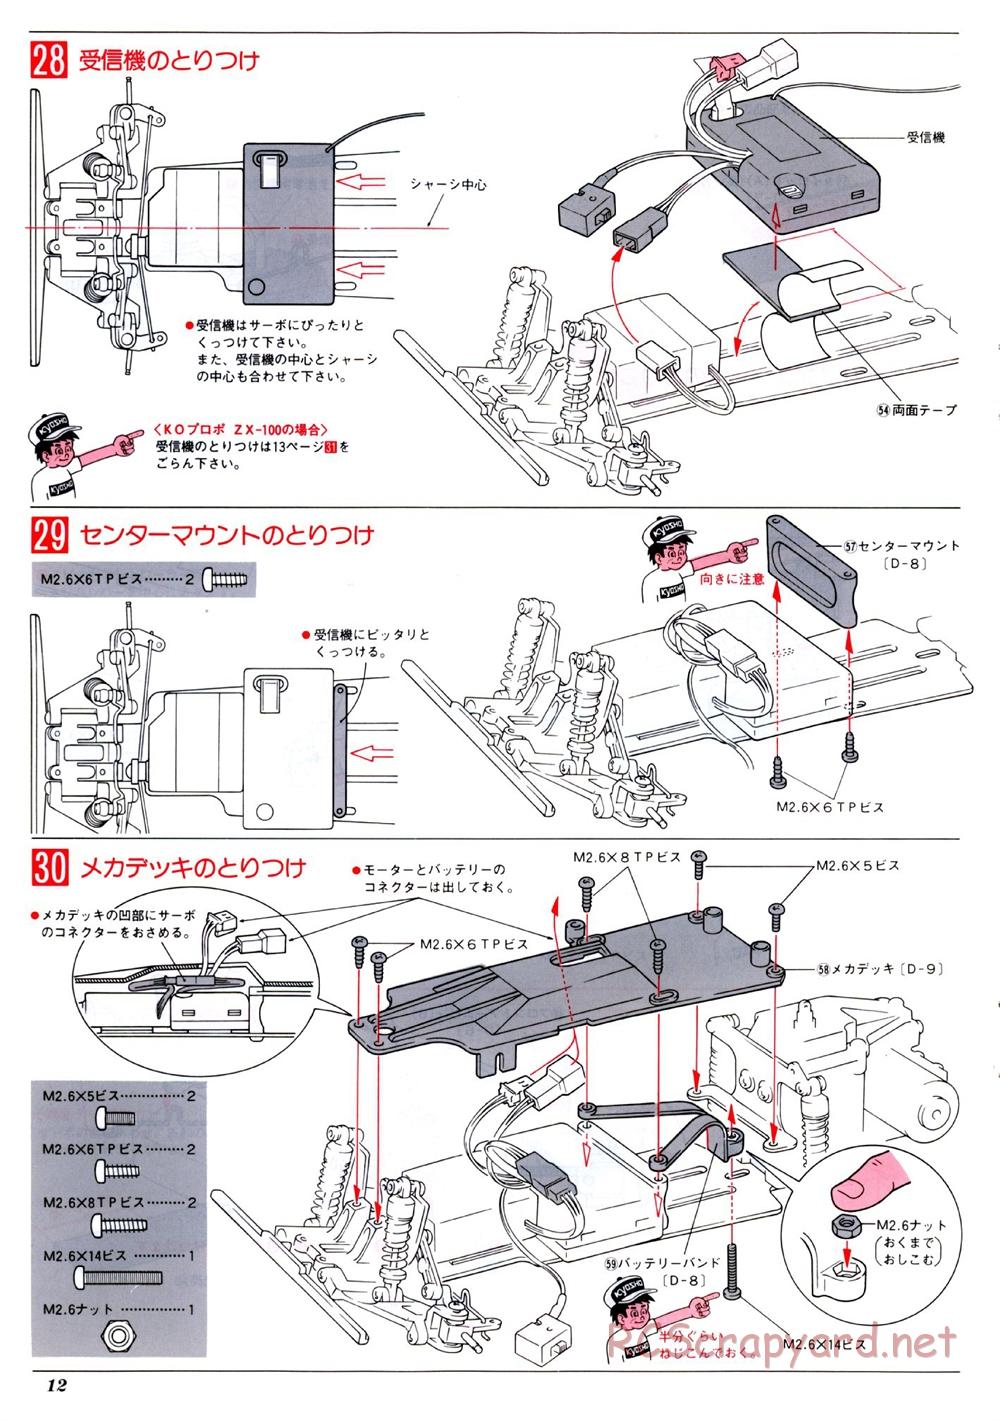 Kyosho - Baja Bugs - Turbo Optima 2WD - Manual - Page 12